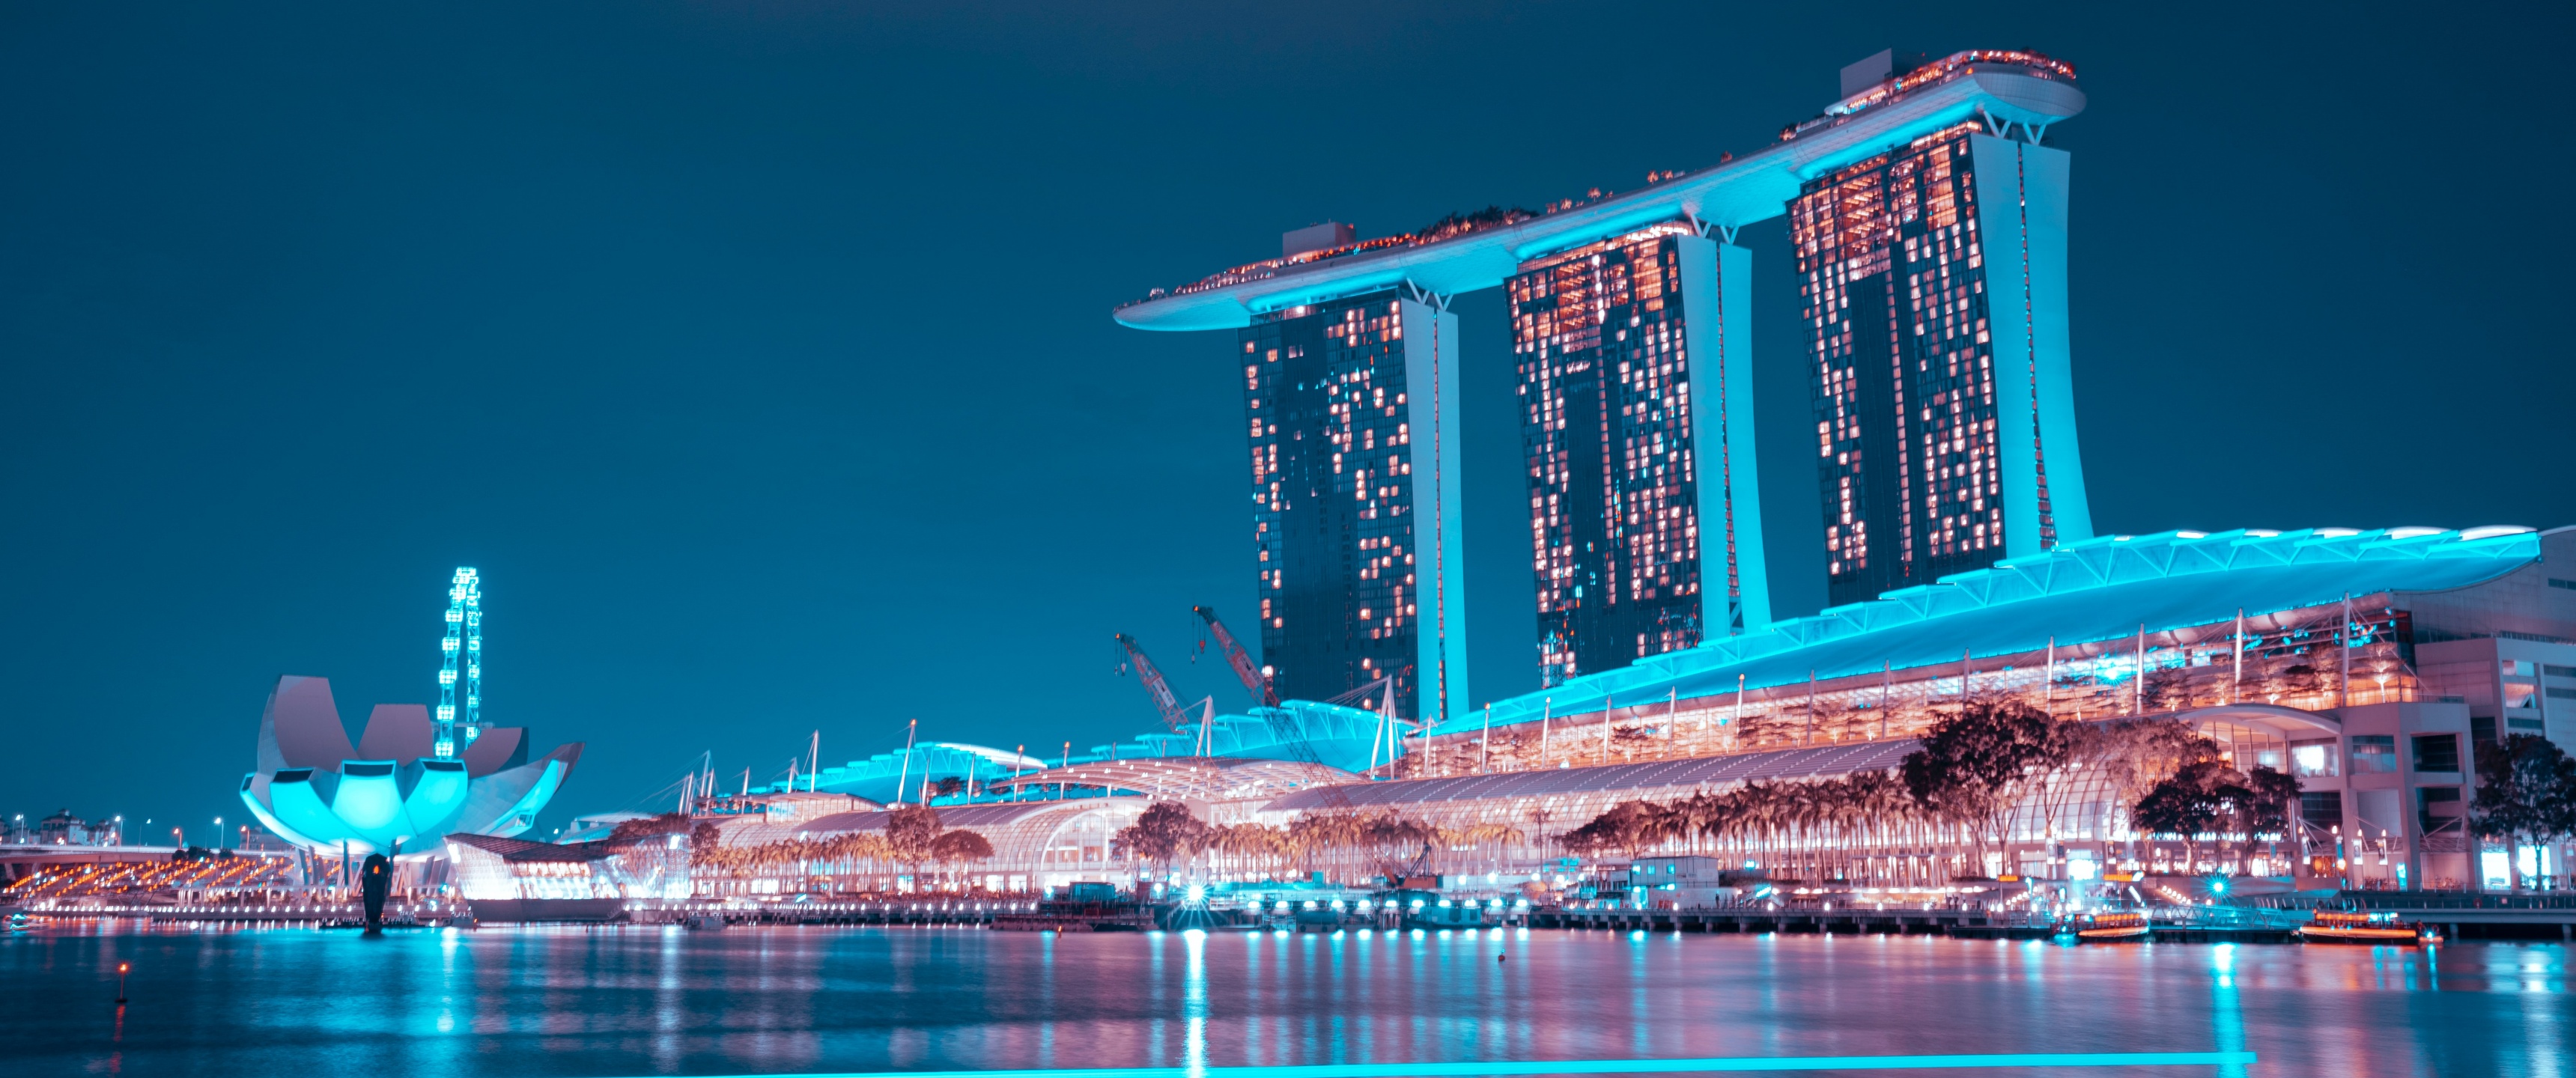 Download wallpaper 3840x2160 singapore cityscape skyline reflections  night 4k wallpaper uhd wallpaper 169 widescreen 3840x2160 hd background  16384